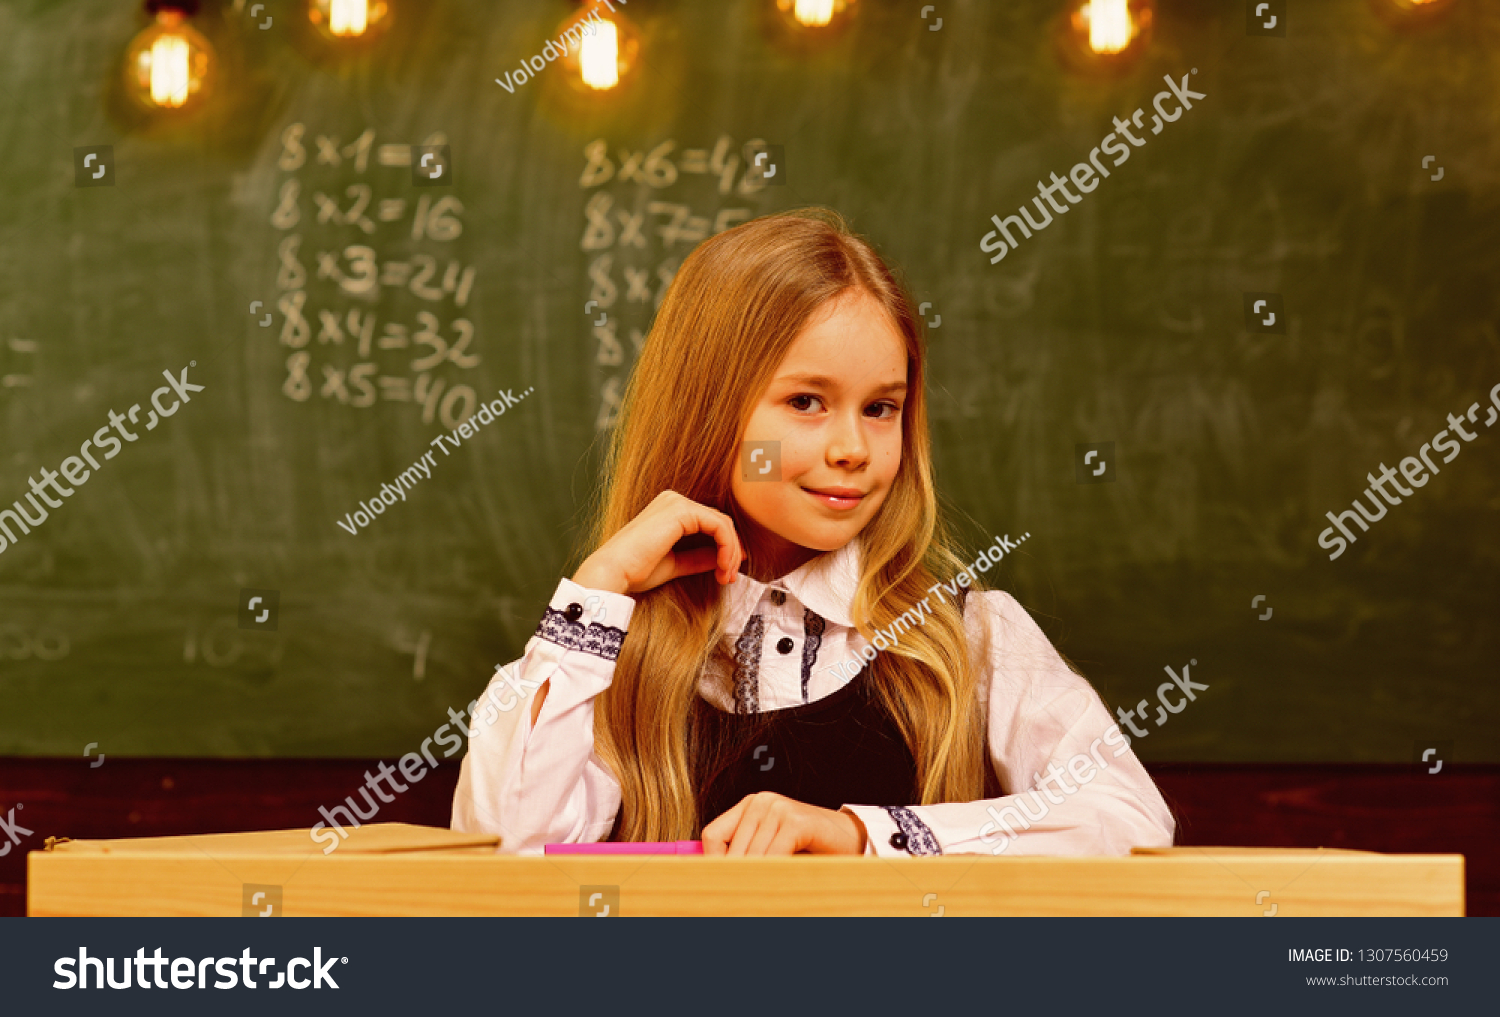 little genius at school. more idea of little genius. future little genius. little genius girl smiling at school. student on exam #1307560459